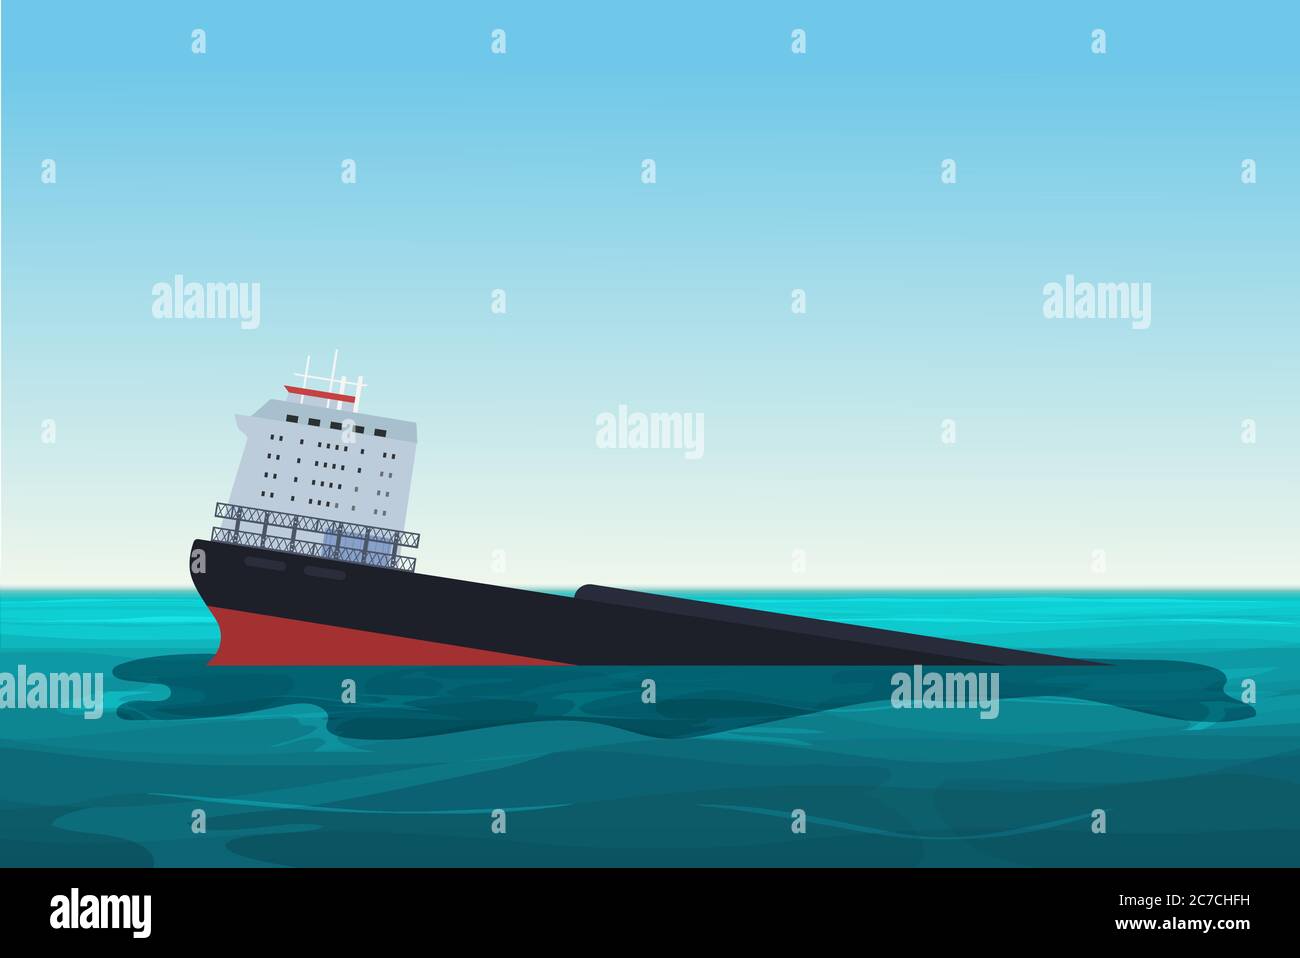 Wrecked oil tanker ship. Oil spill accident. Pollution Environment concept vector illustration Stock Vector